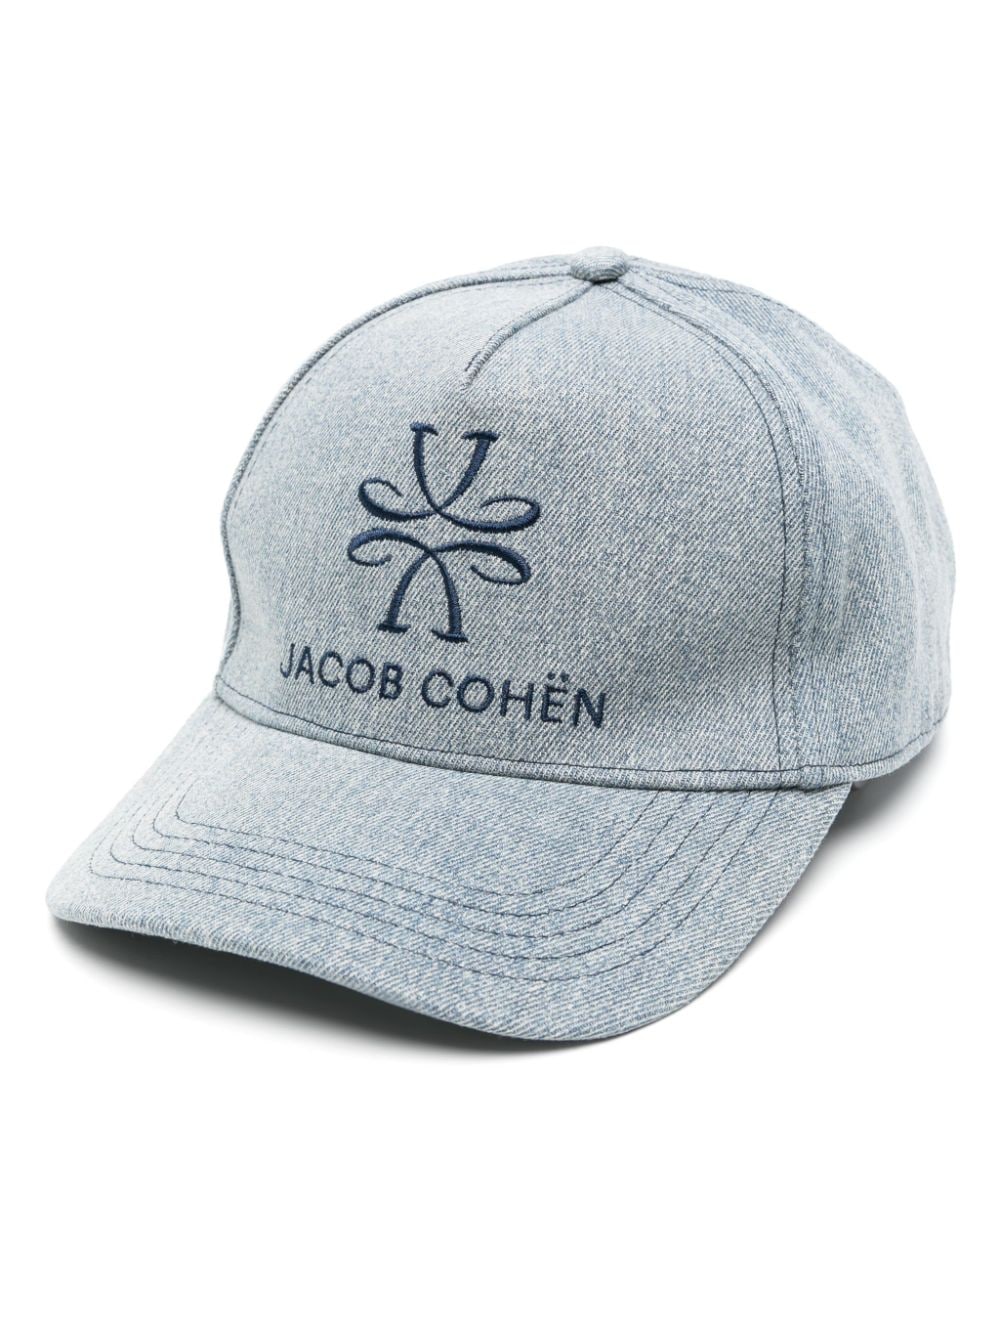 Jacob Cohën logo-embroidered denim cap